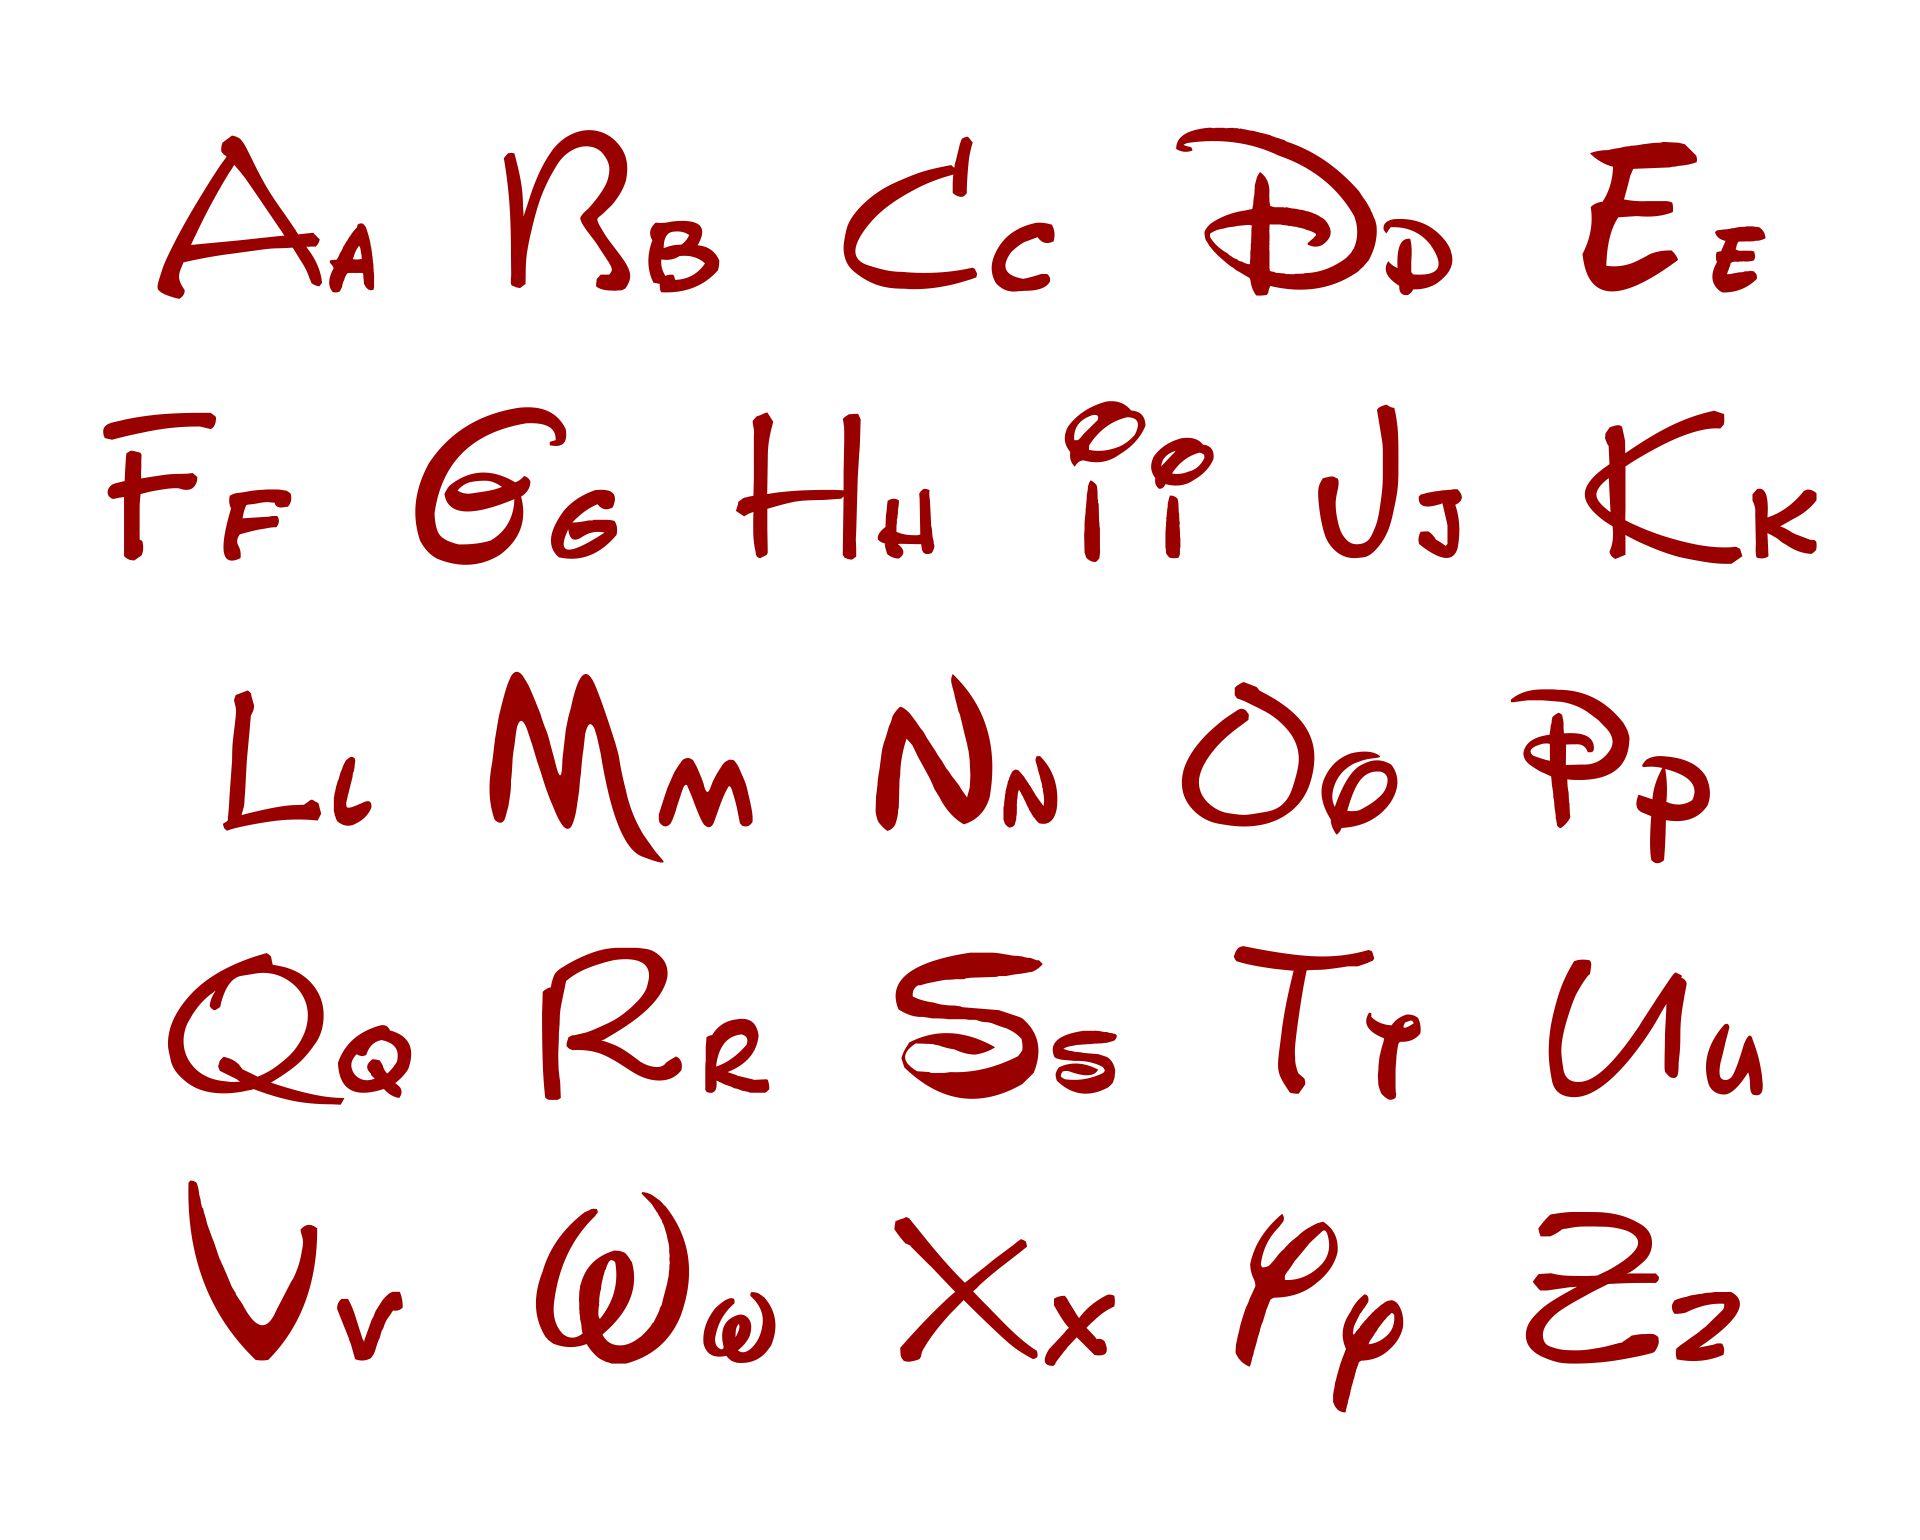 Disney Font Alphabet Letter Printables